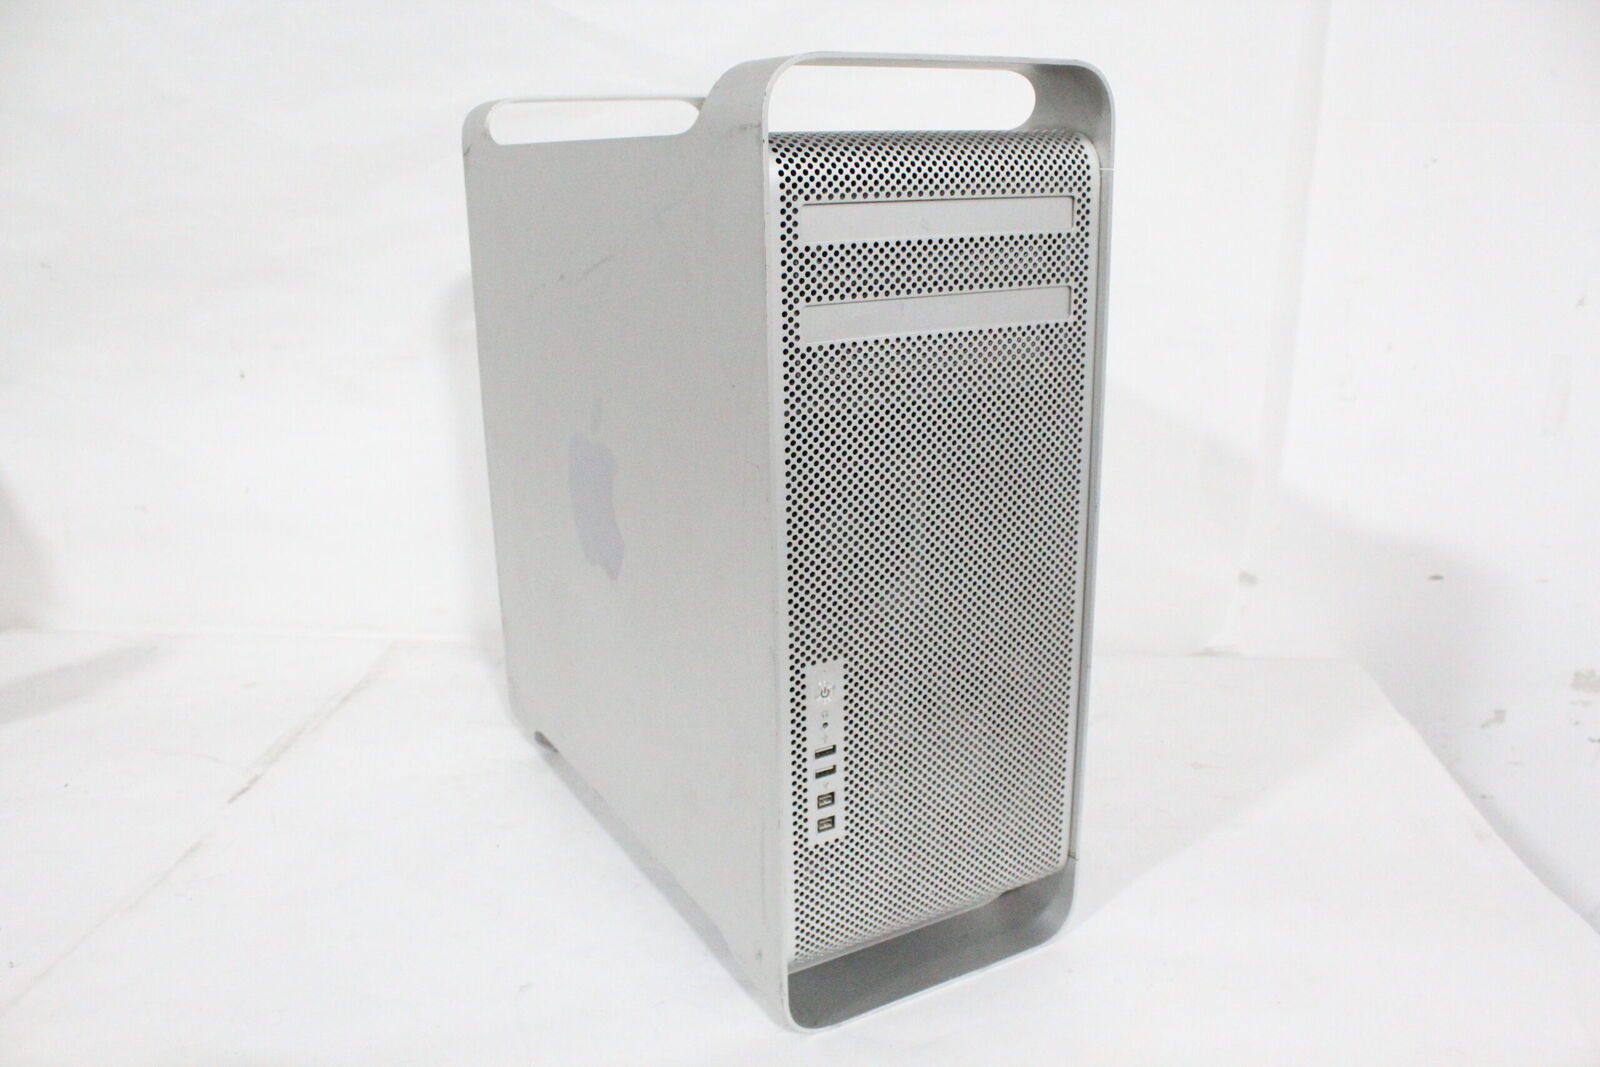 Apple Mac Pro (Early 2009) (NO POWER) (1541-260)